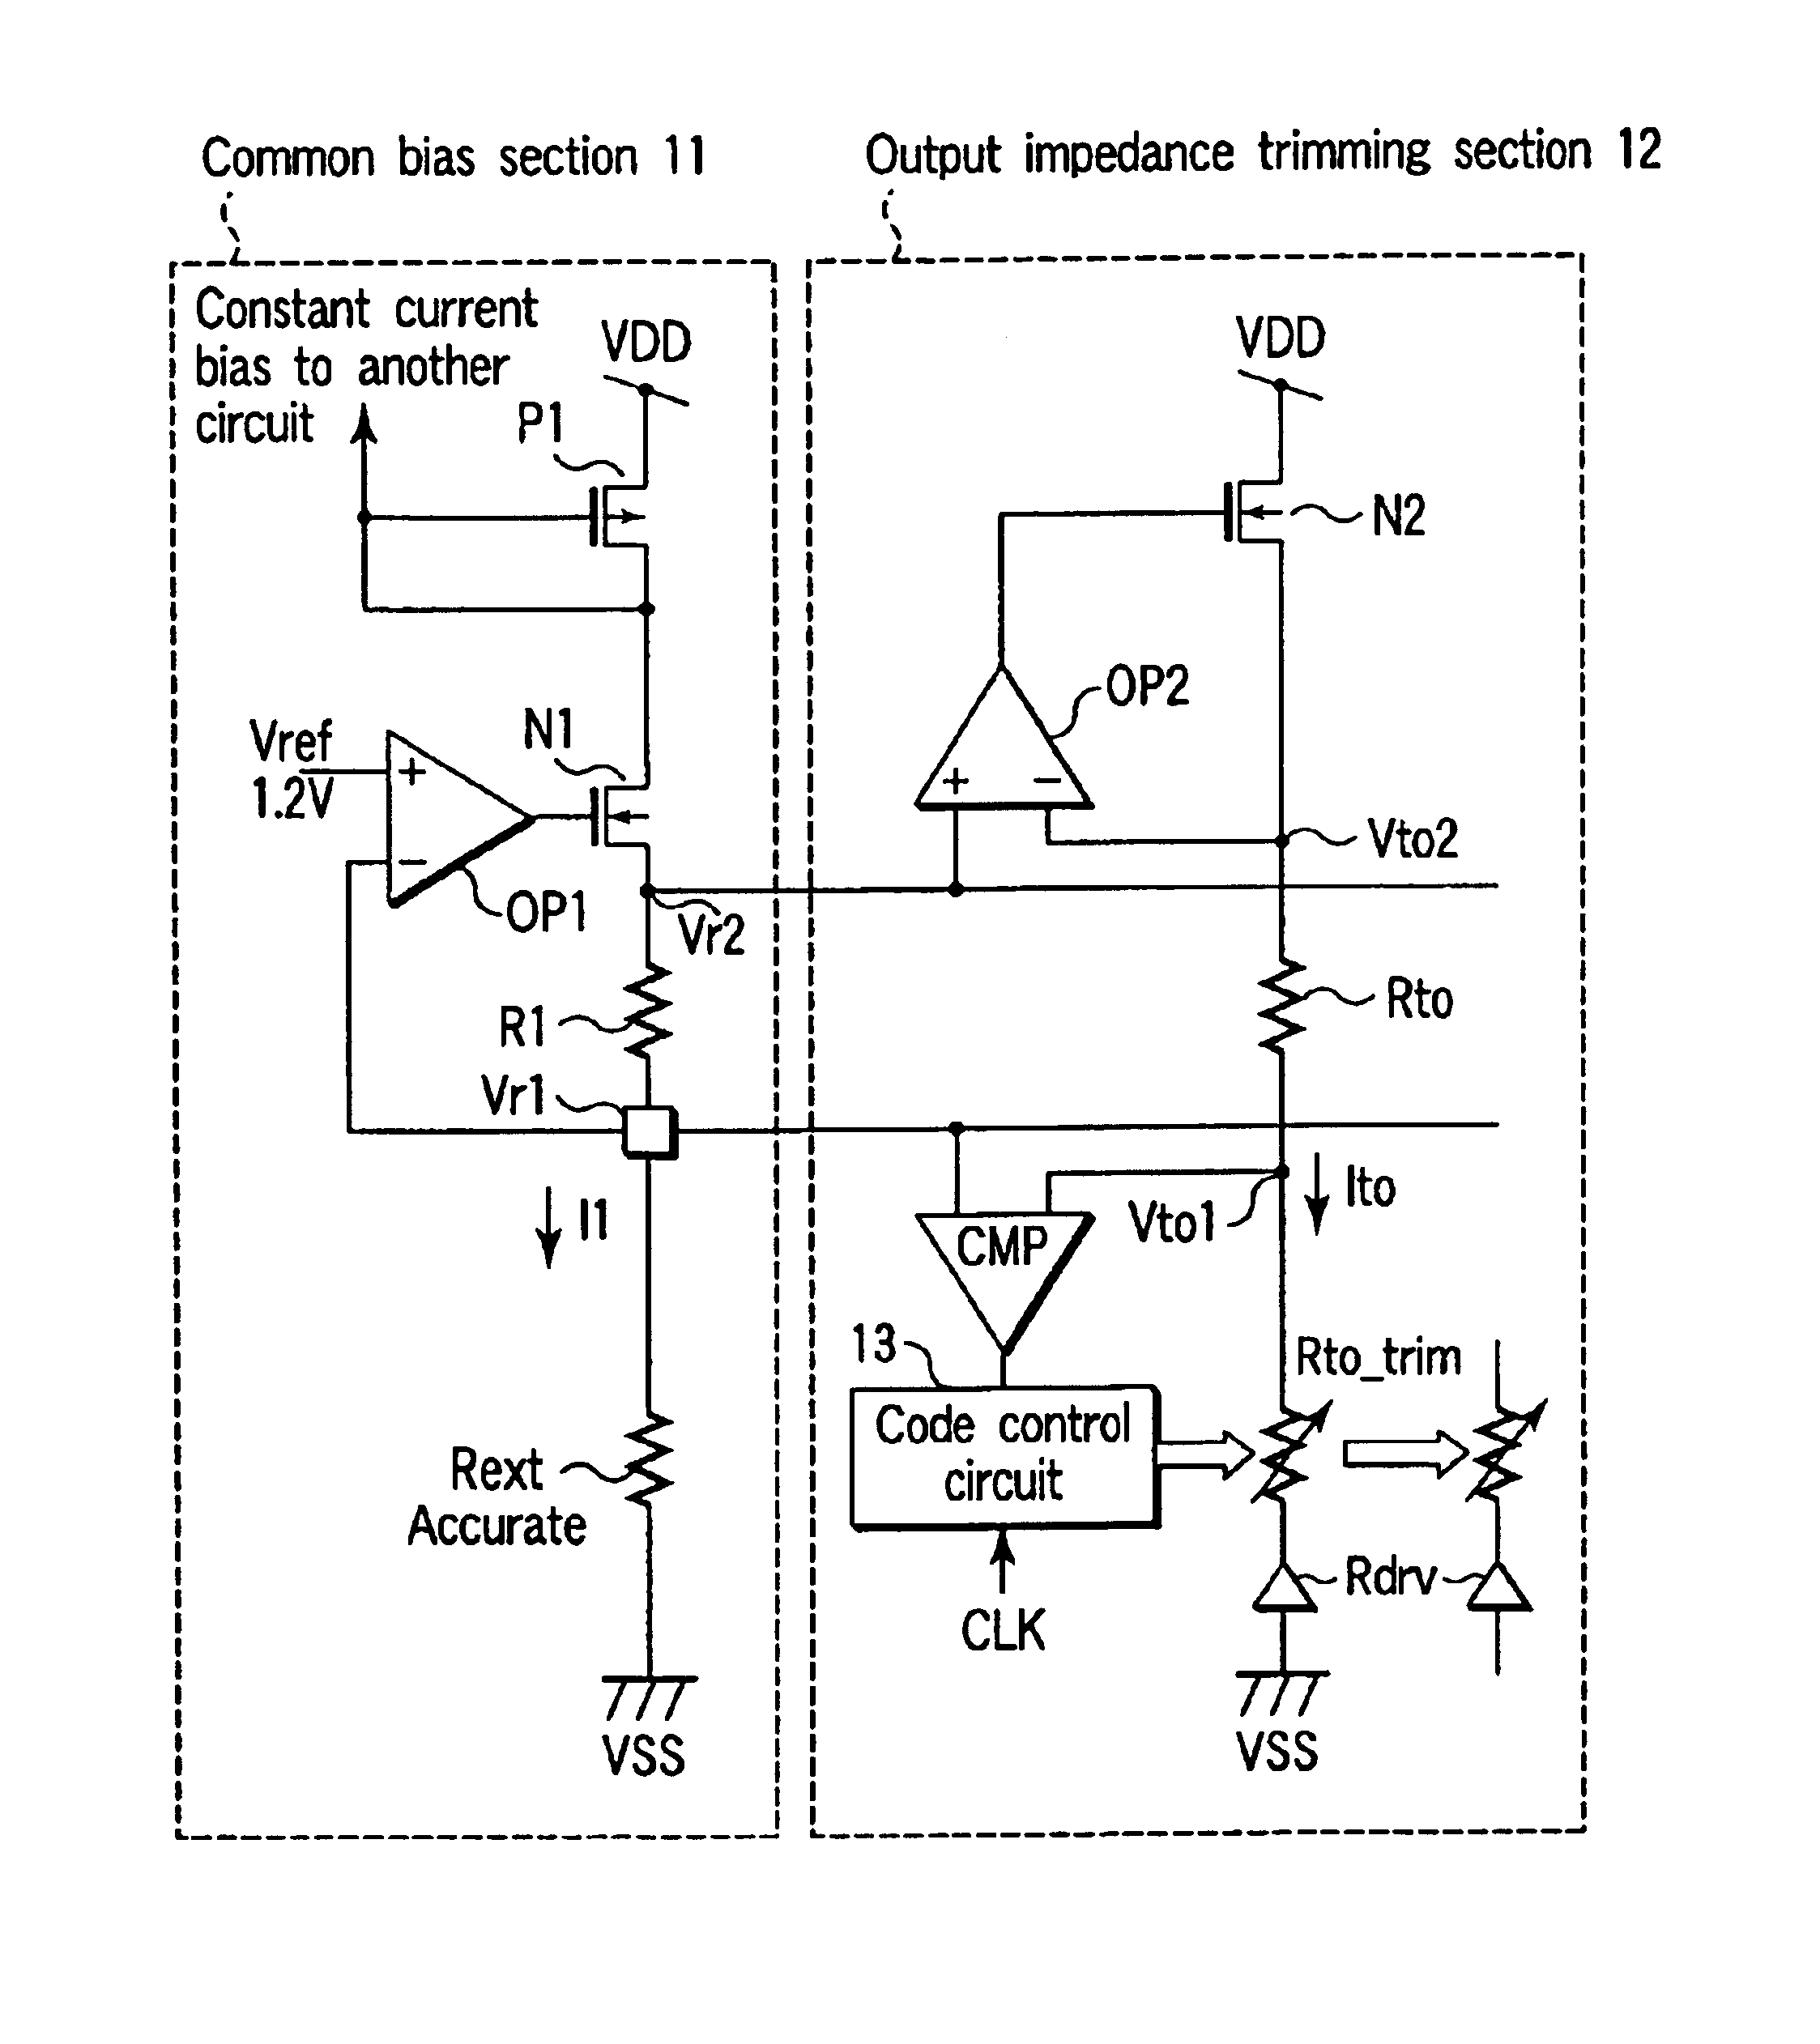 Impedance trimming circuit